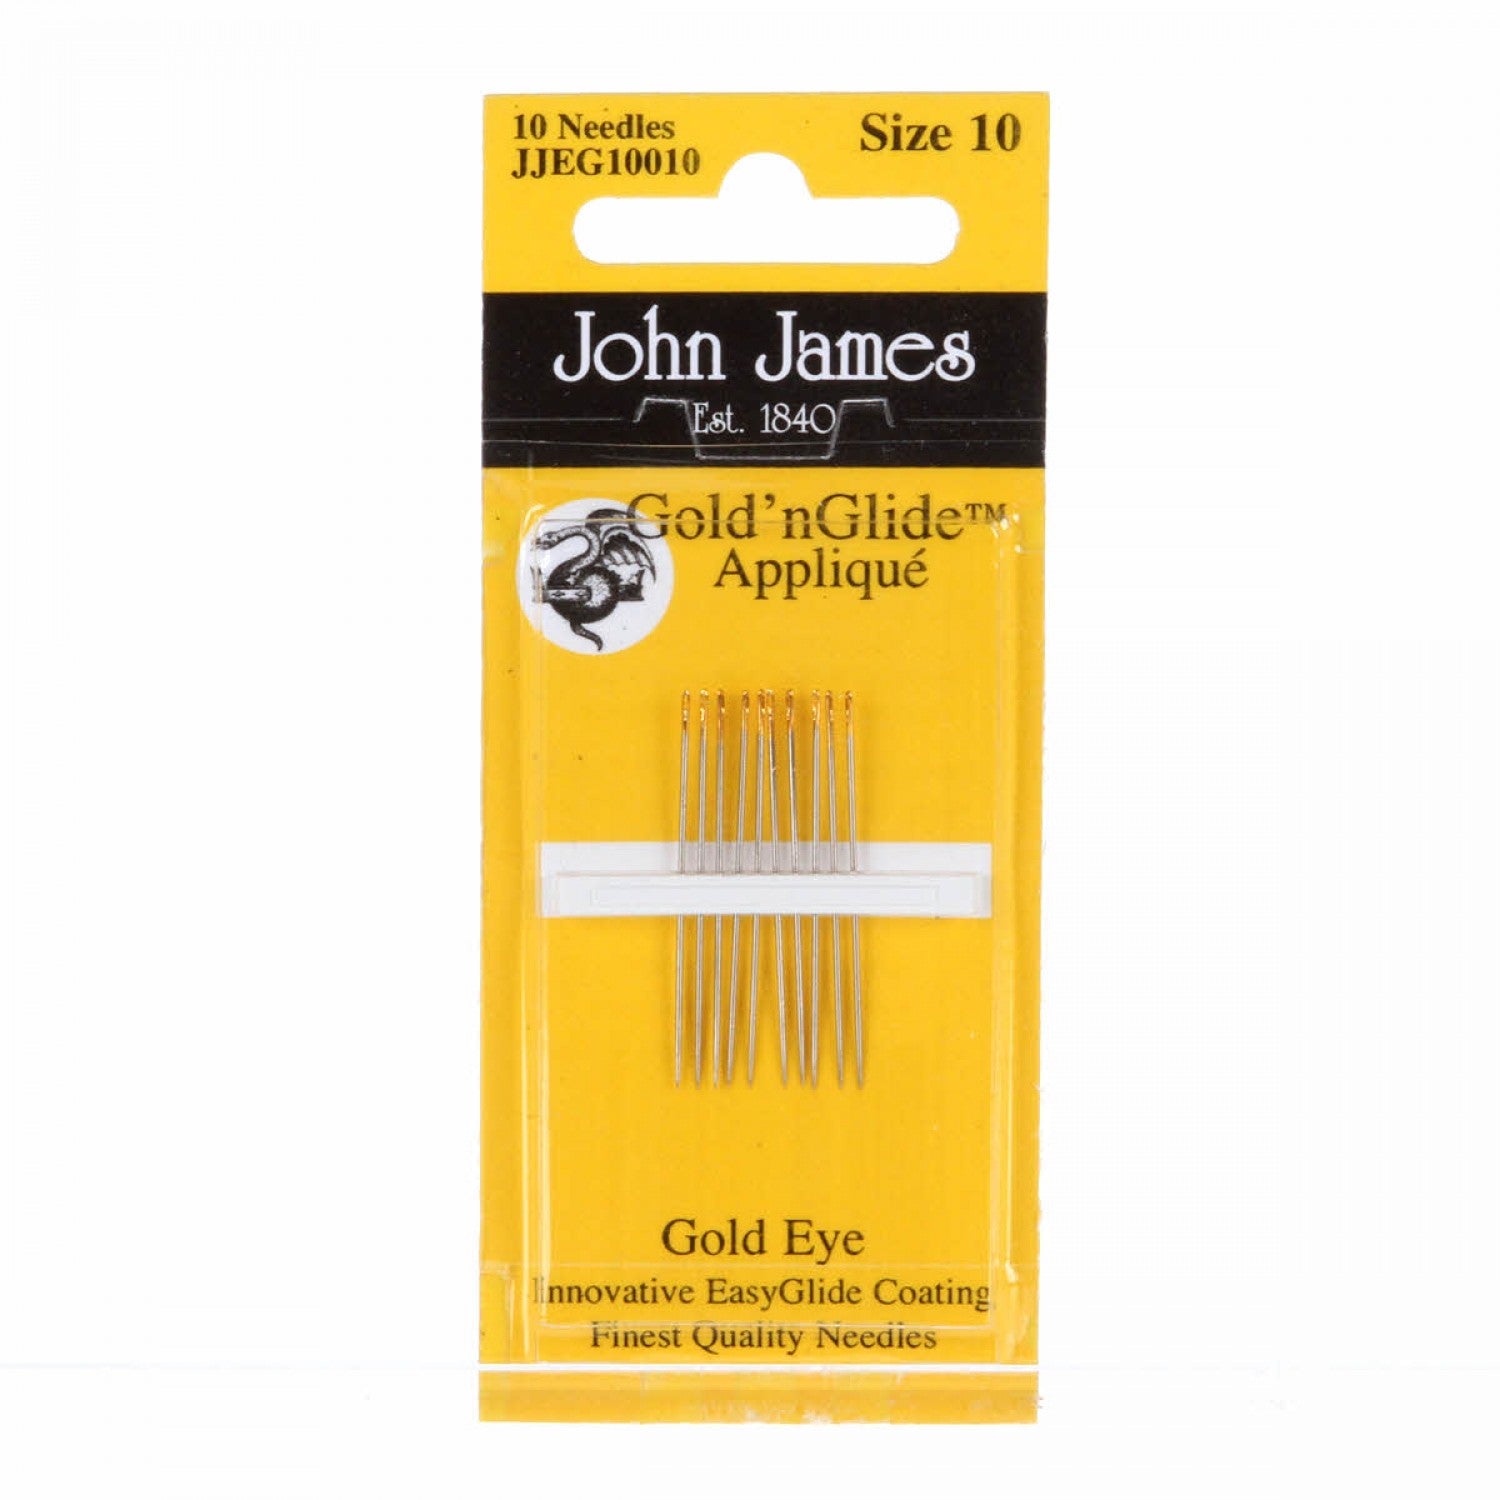 John James Gold 'n Glide Applique Needles